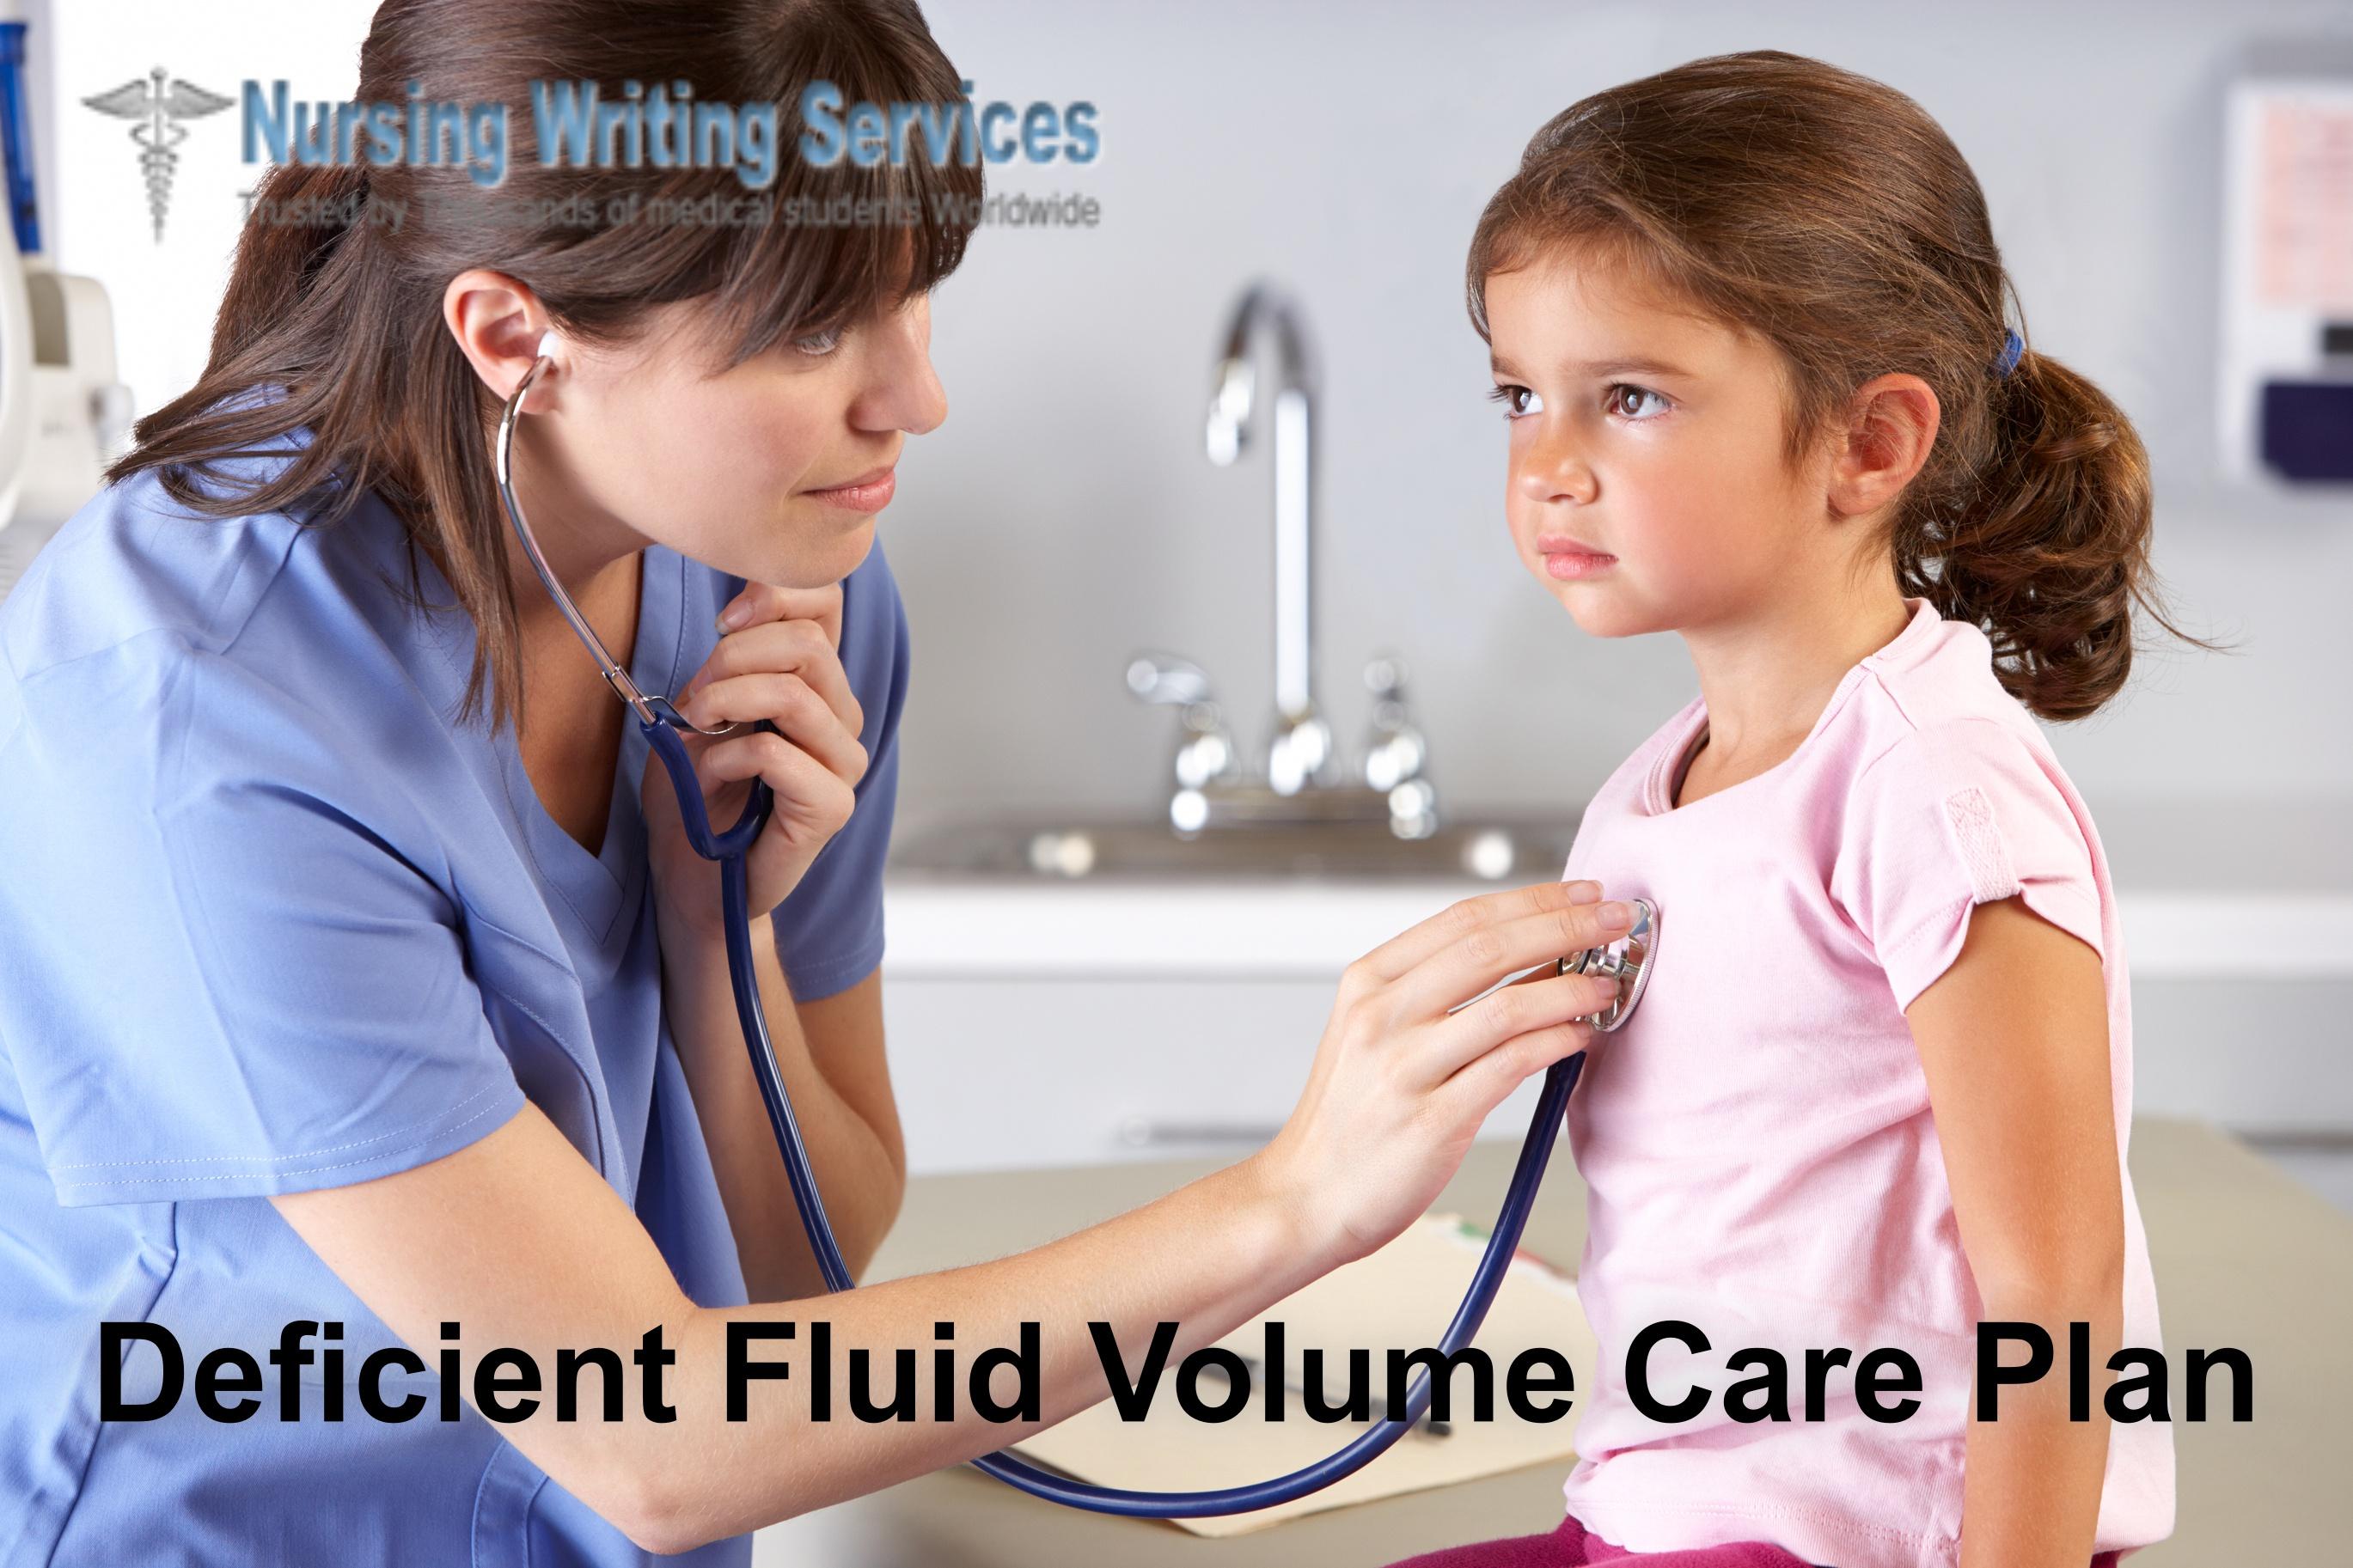 Deficient Fluid Volume Care Plan Writing Services